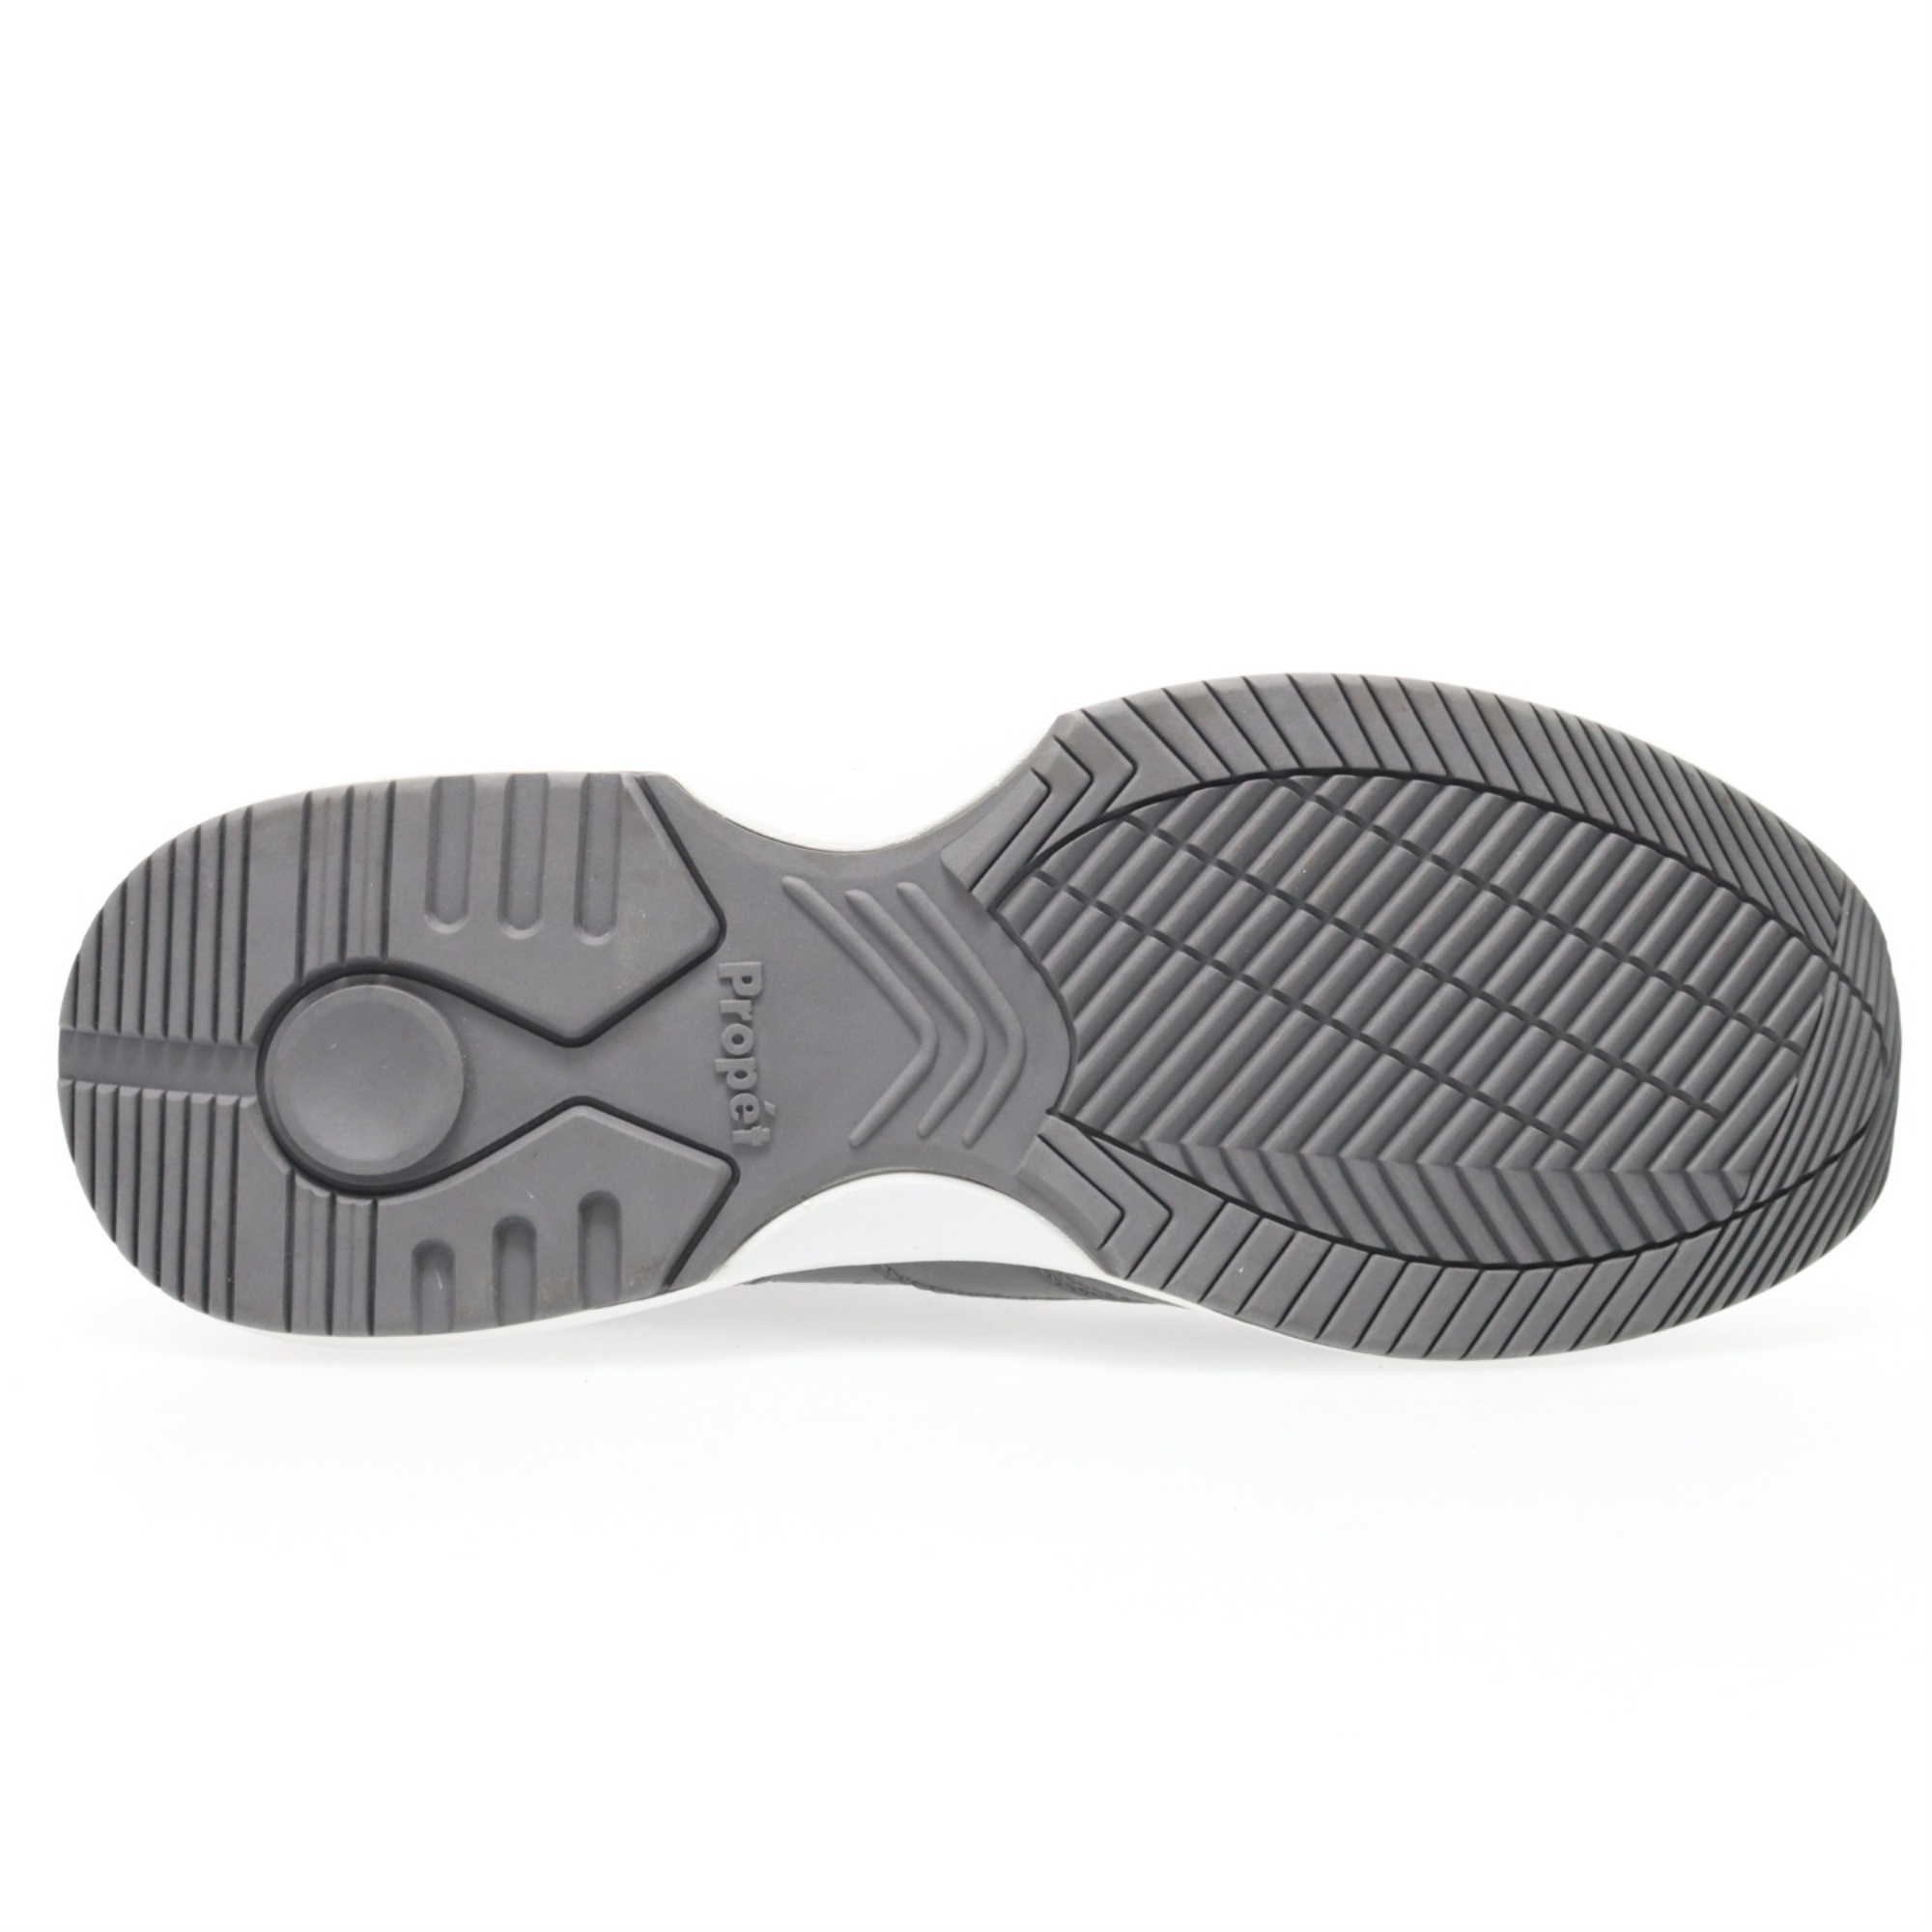 Propet Life Walker Strap Men's Sneakers - Dark Grey, Size 12 - image 5 of 5